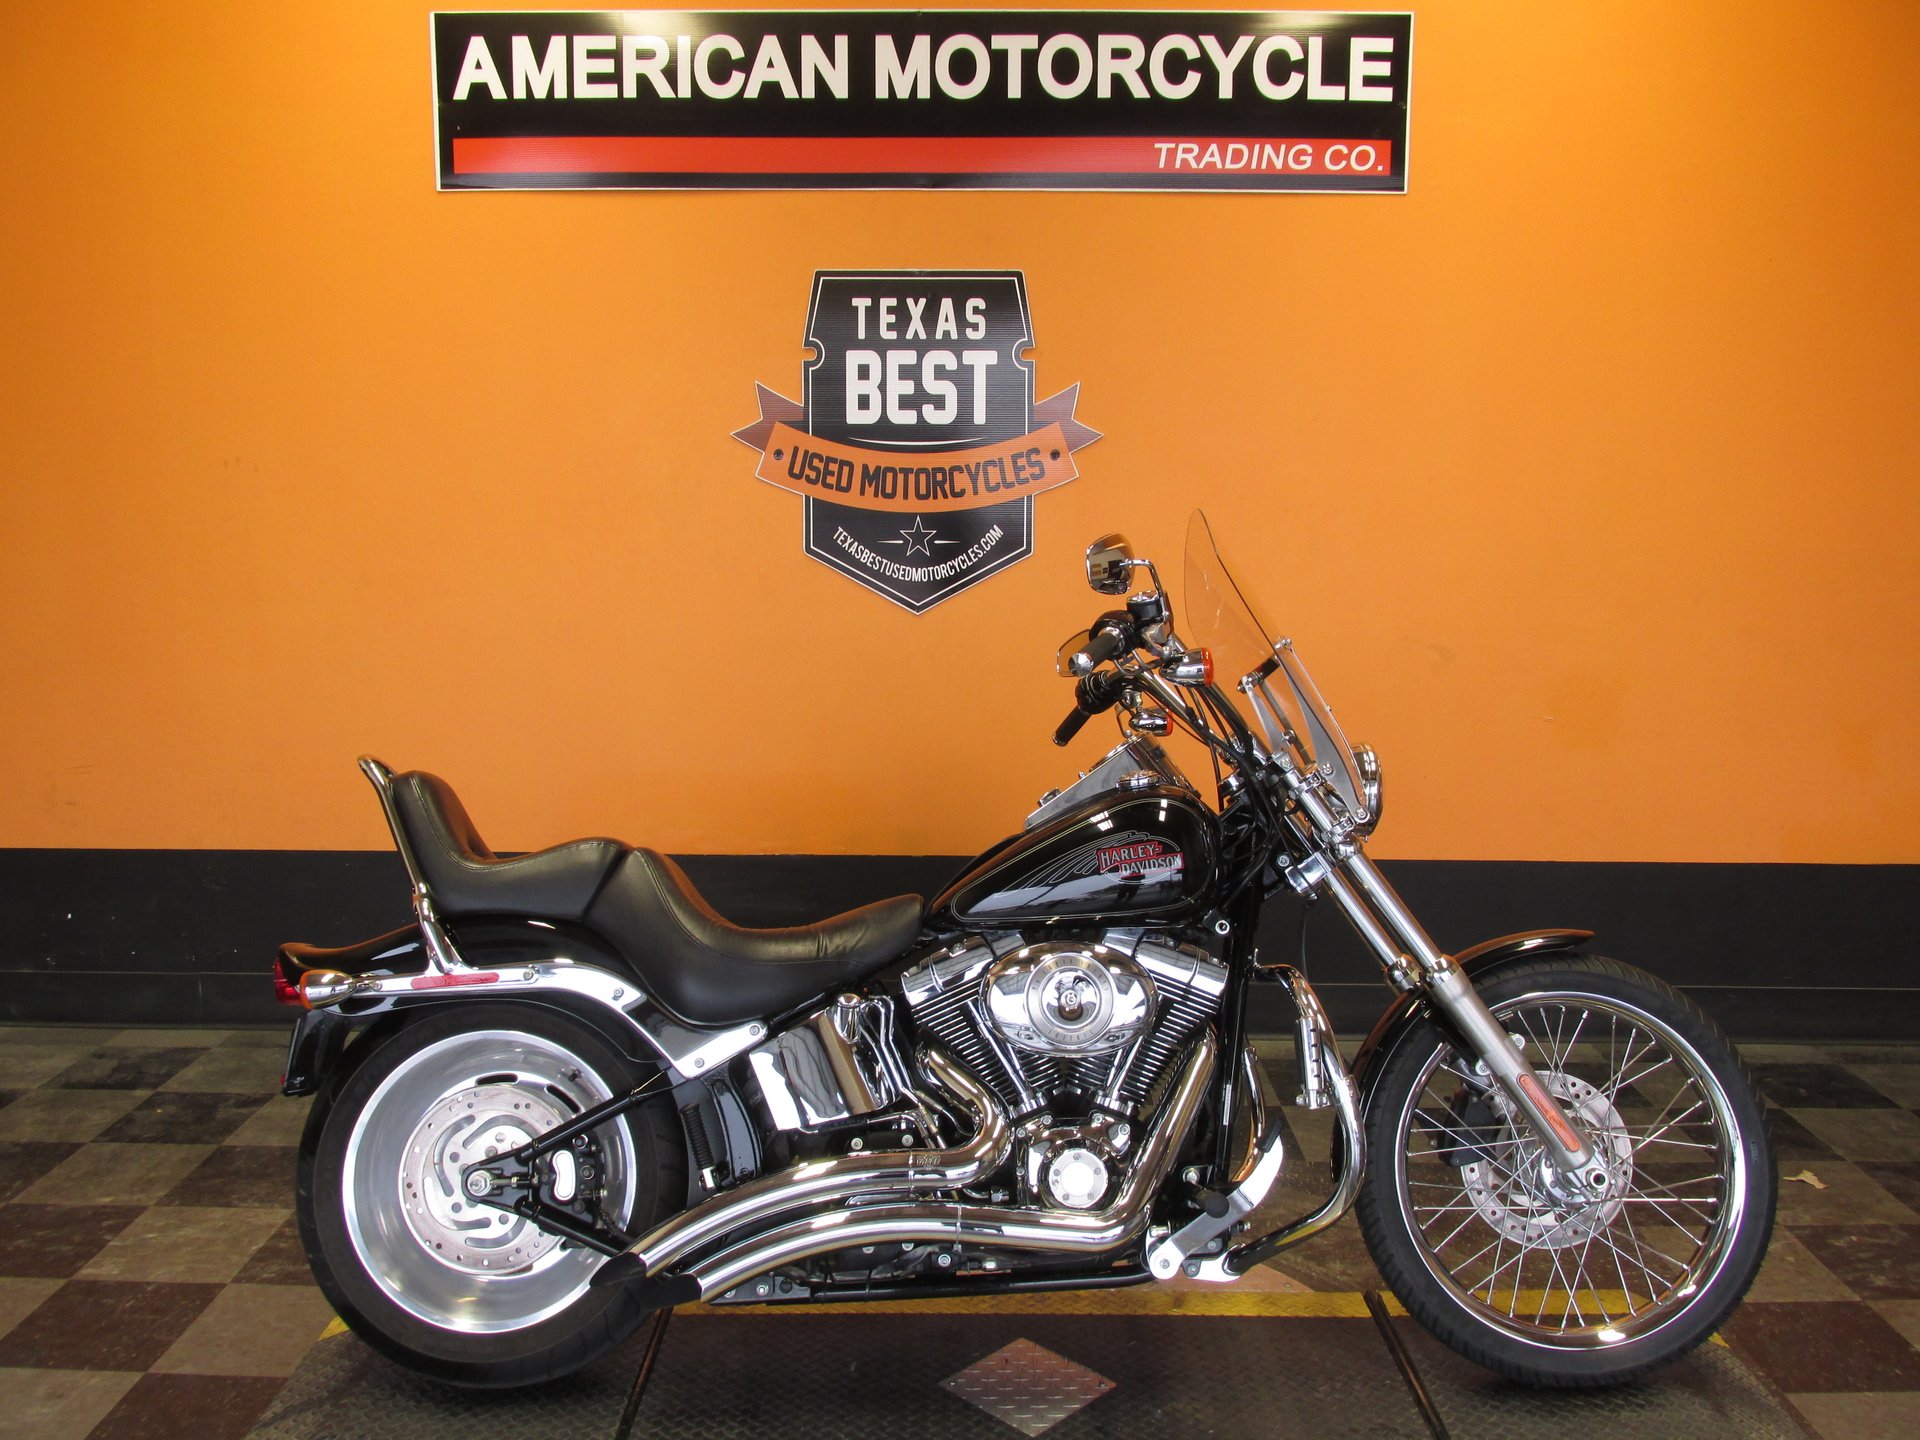 2007 Harley Davidson Softail Promotions